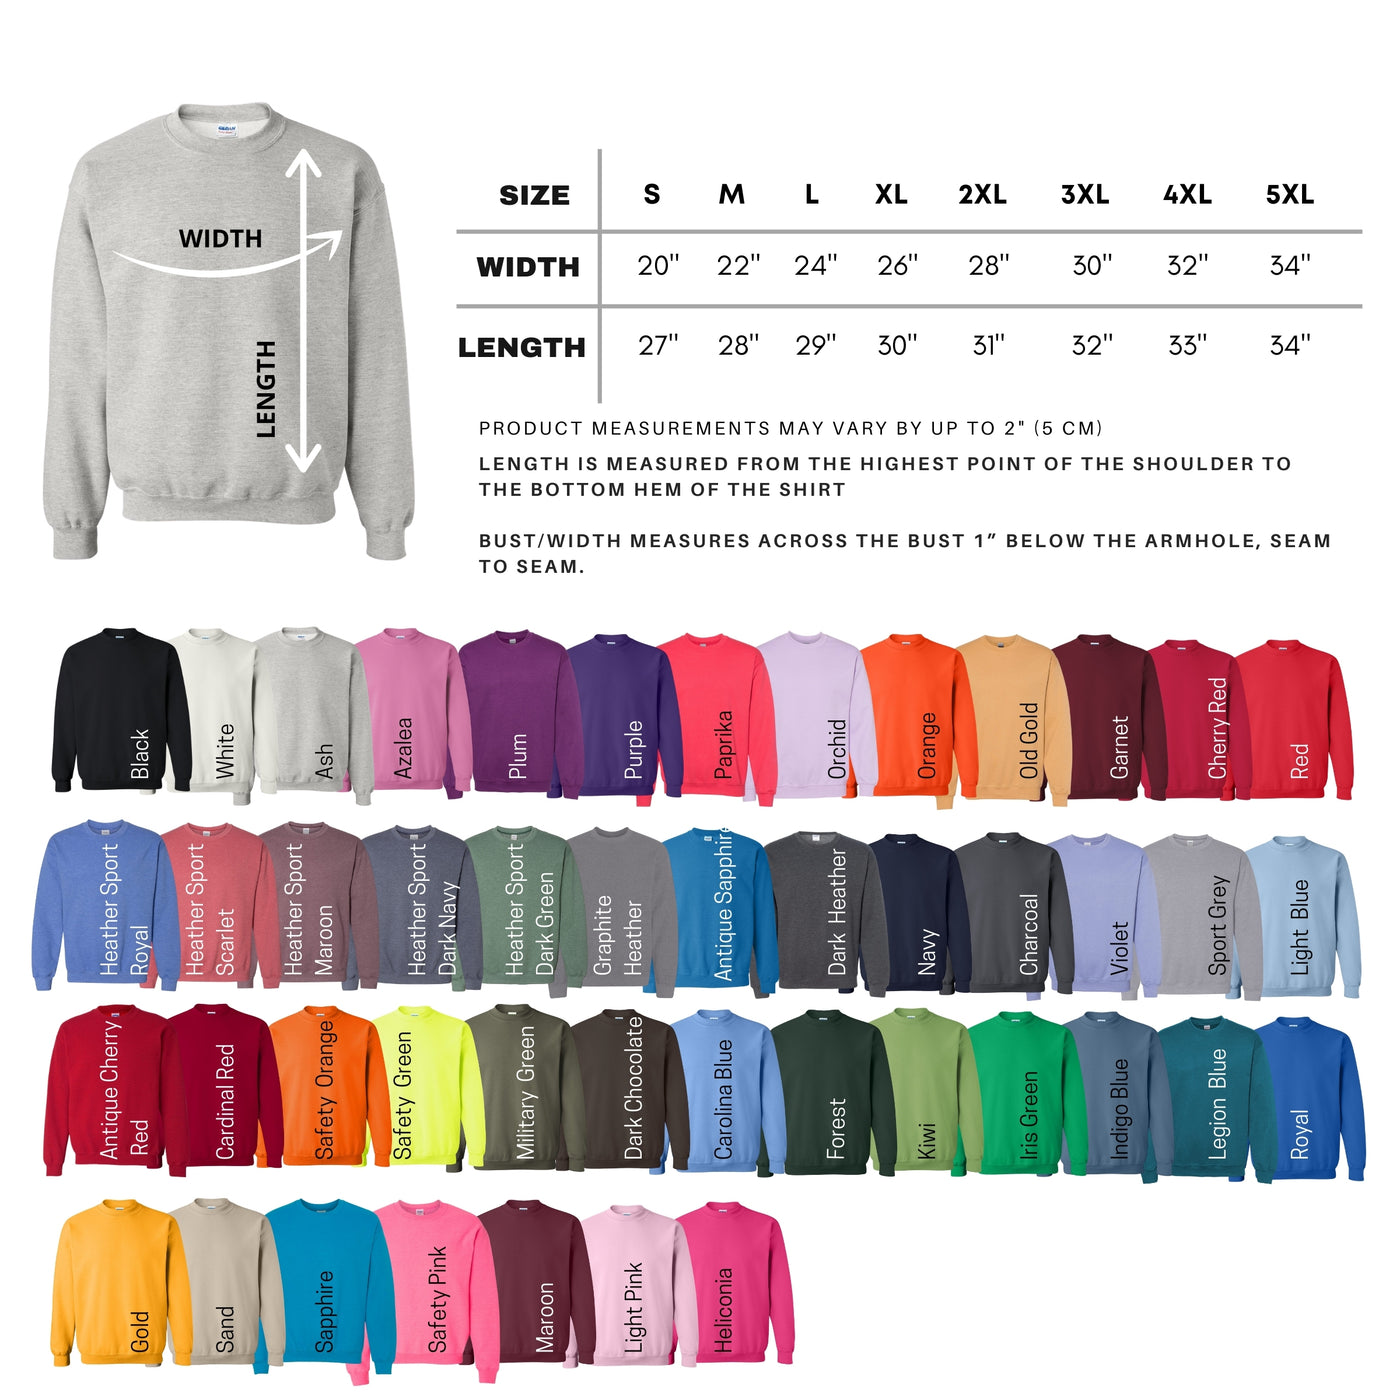 "Sweater Weather" Sweatshirt or T-shirt